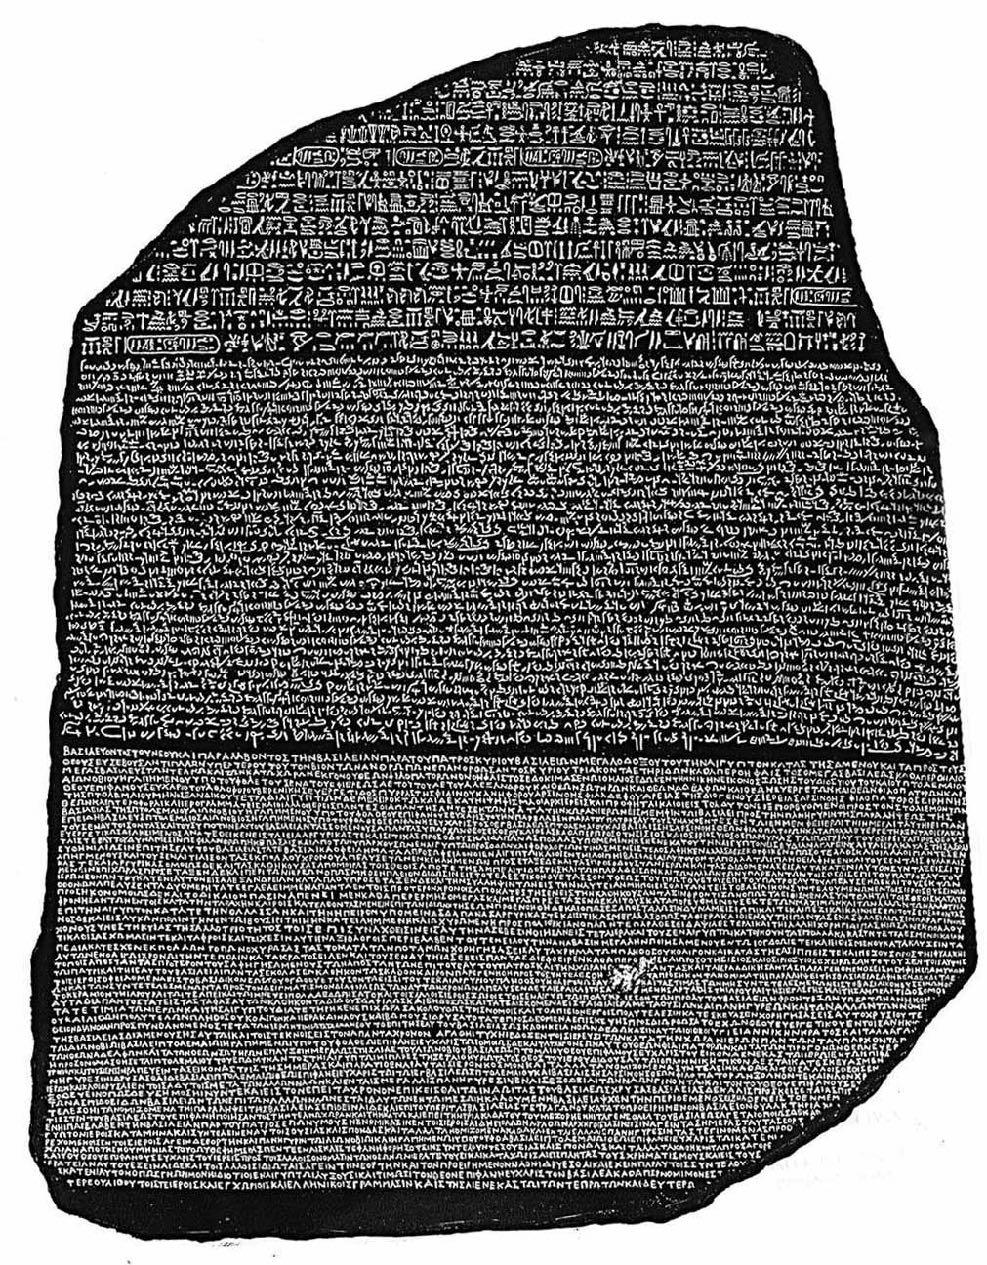 The Rosetta Stone The